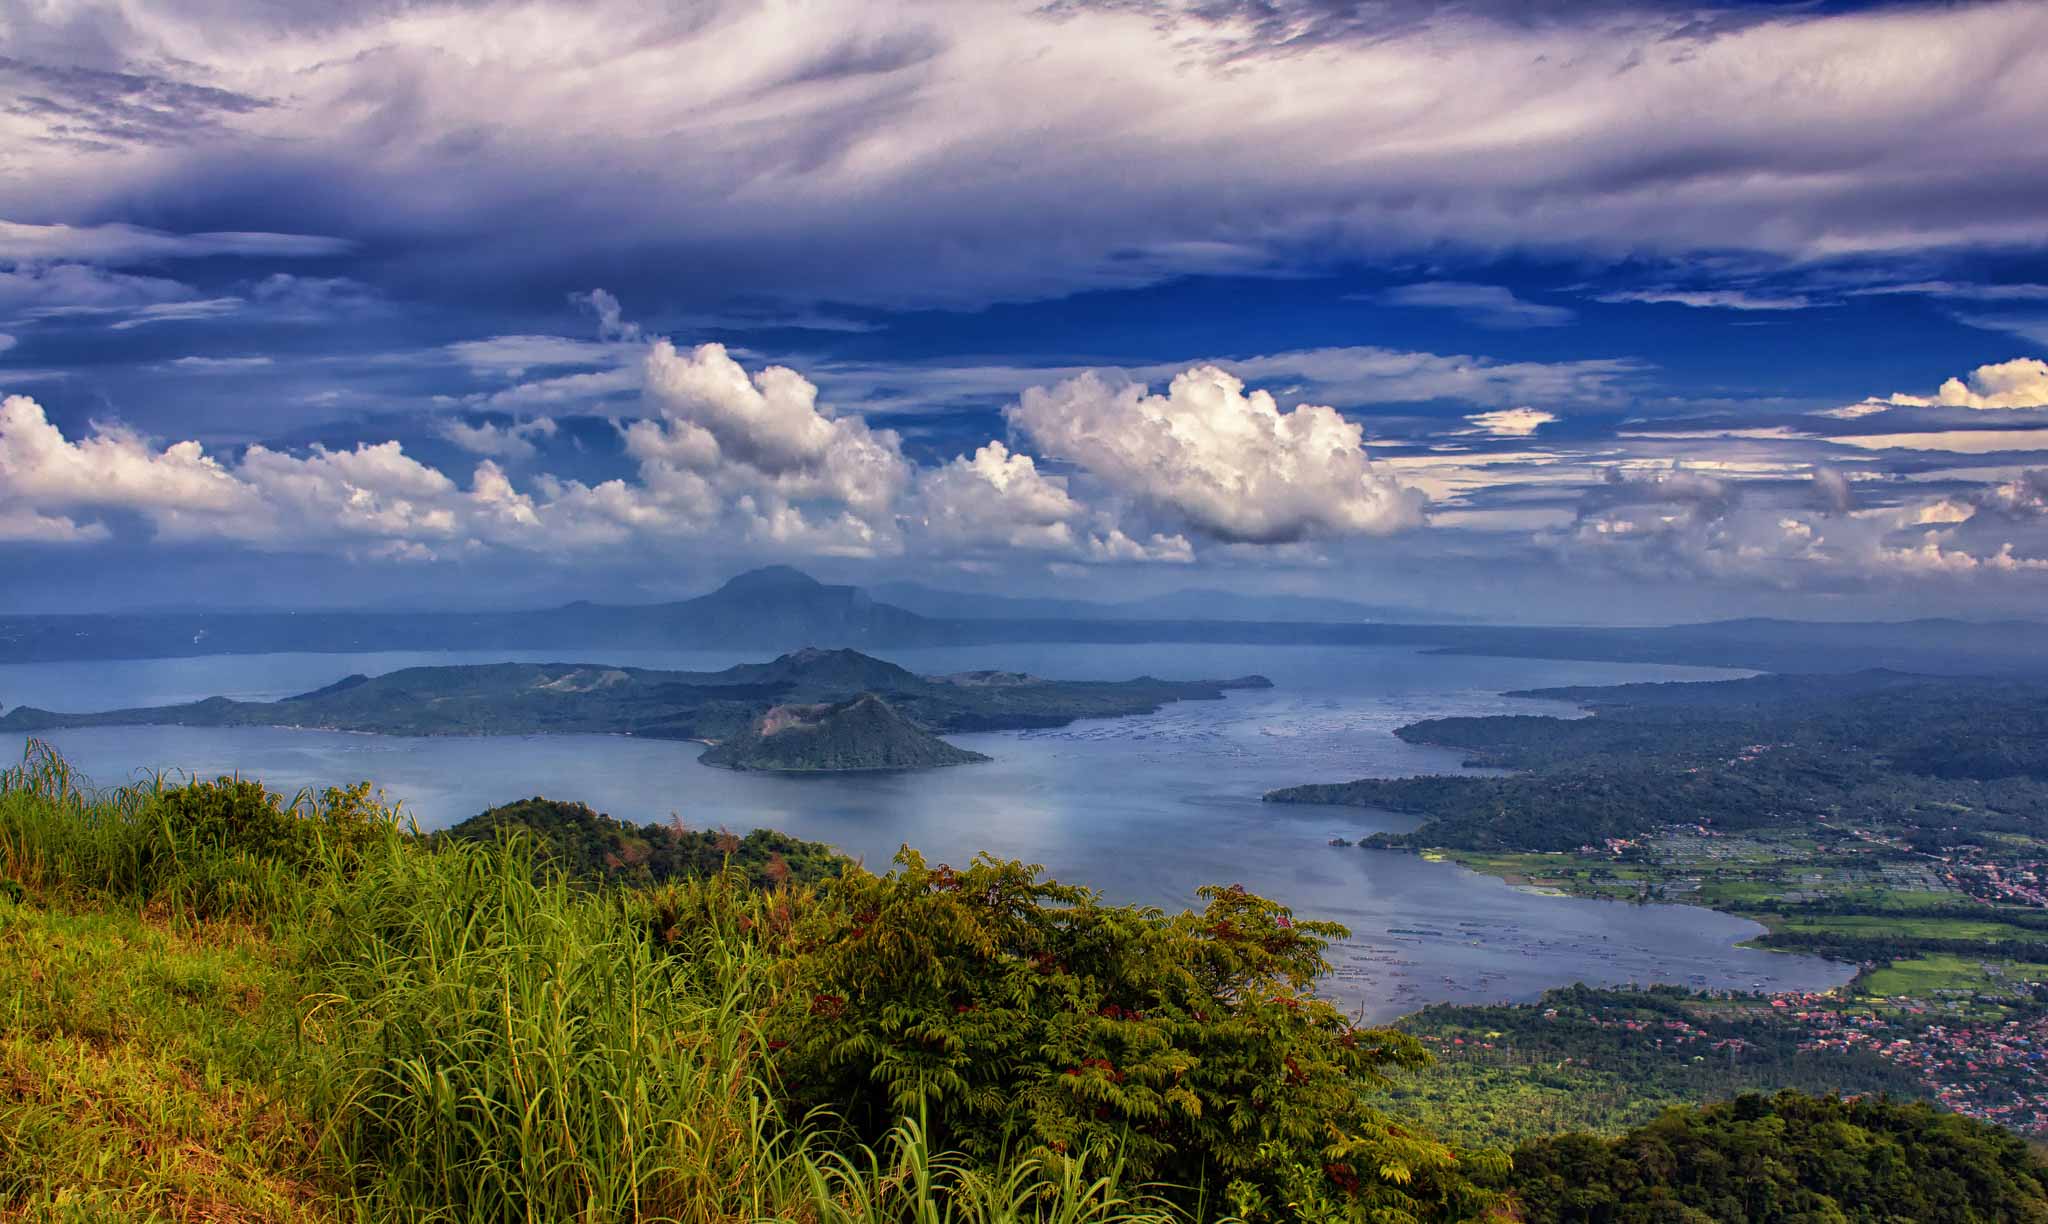 Tagaytay Philippines #1 - Taal Lake and Volcano